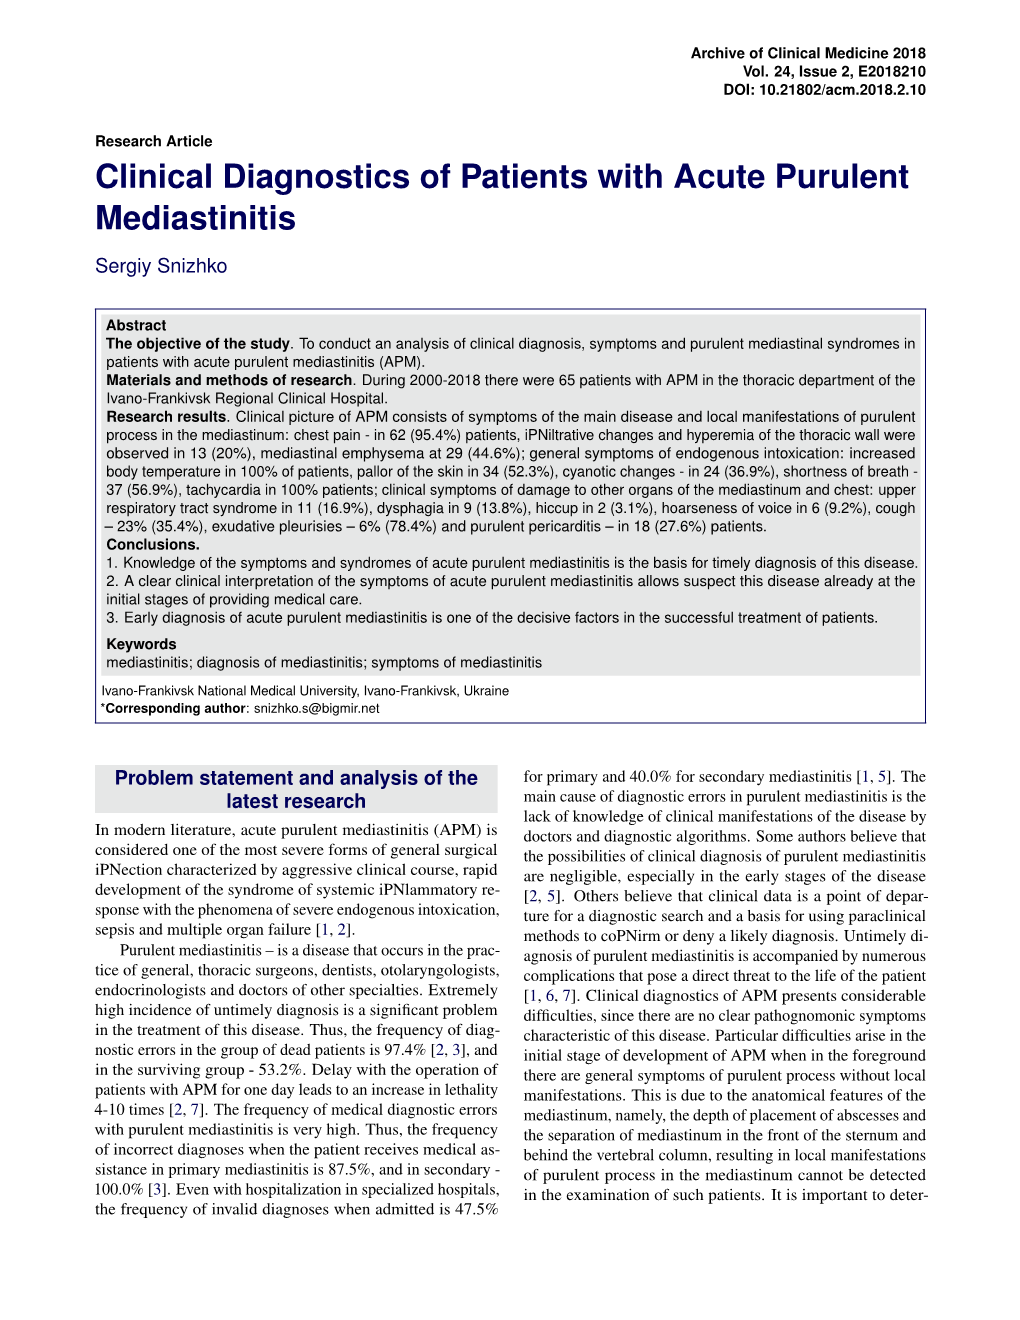 Clinical Diagnostics of Patients with Acute Purulent Mediastinitis